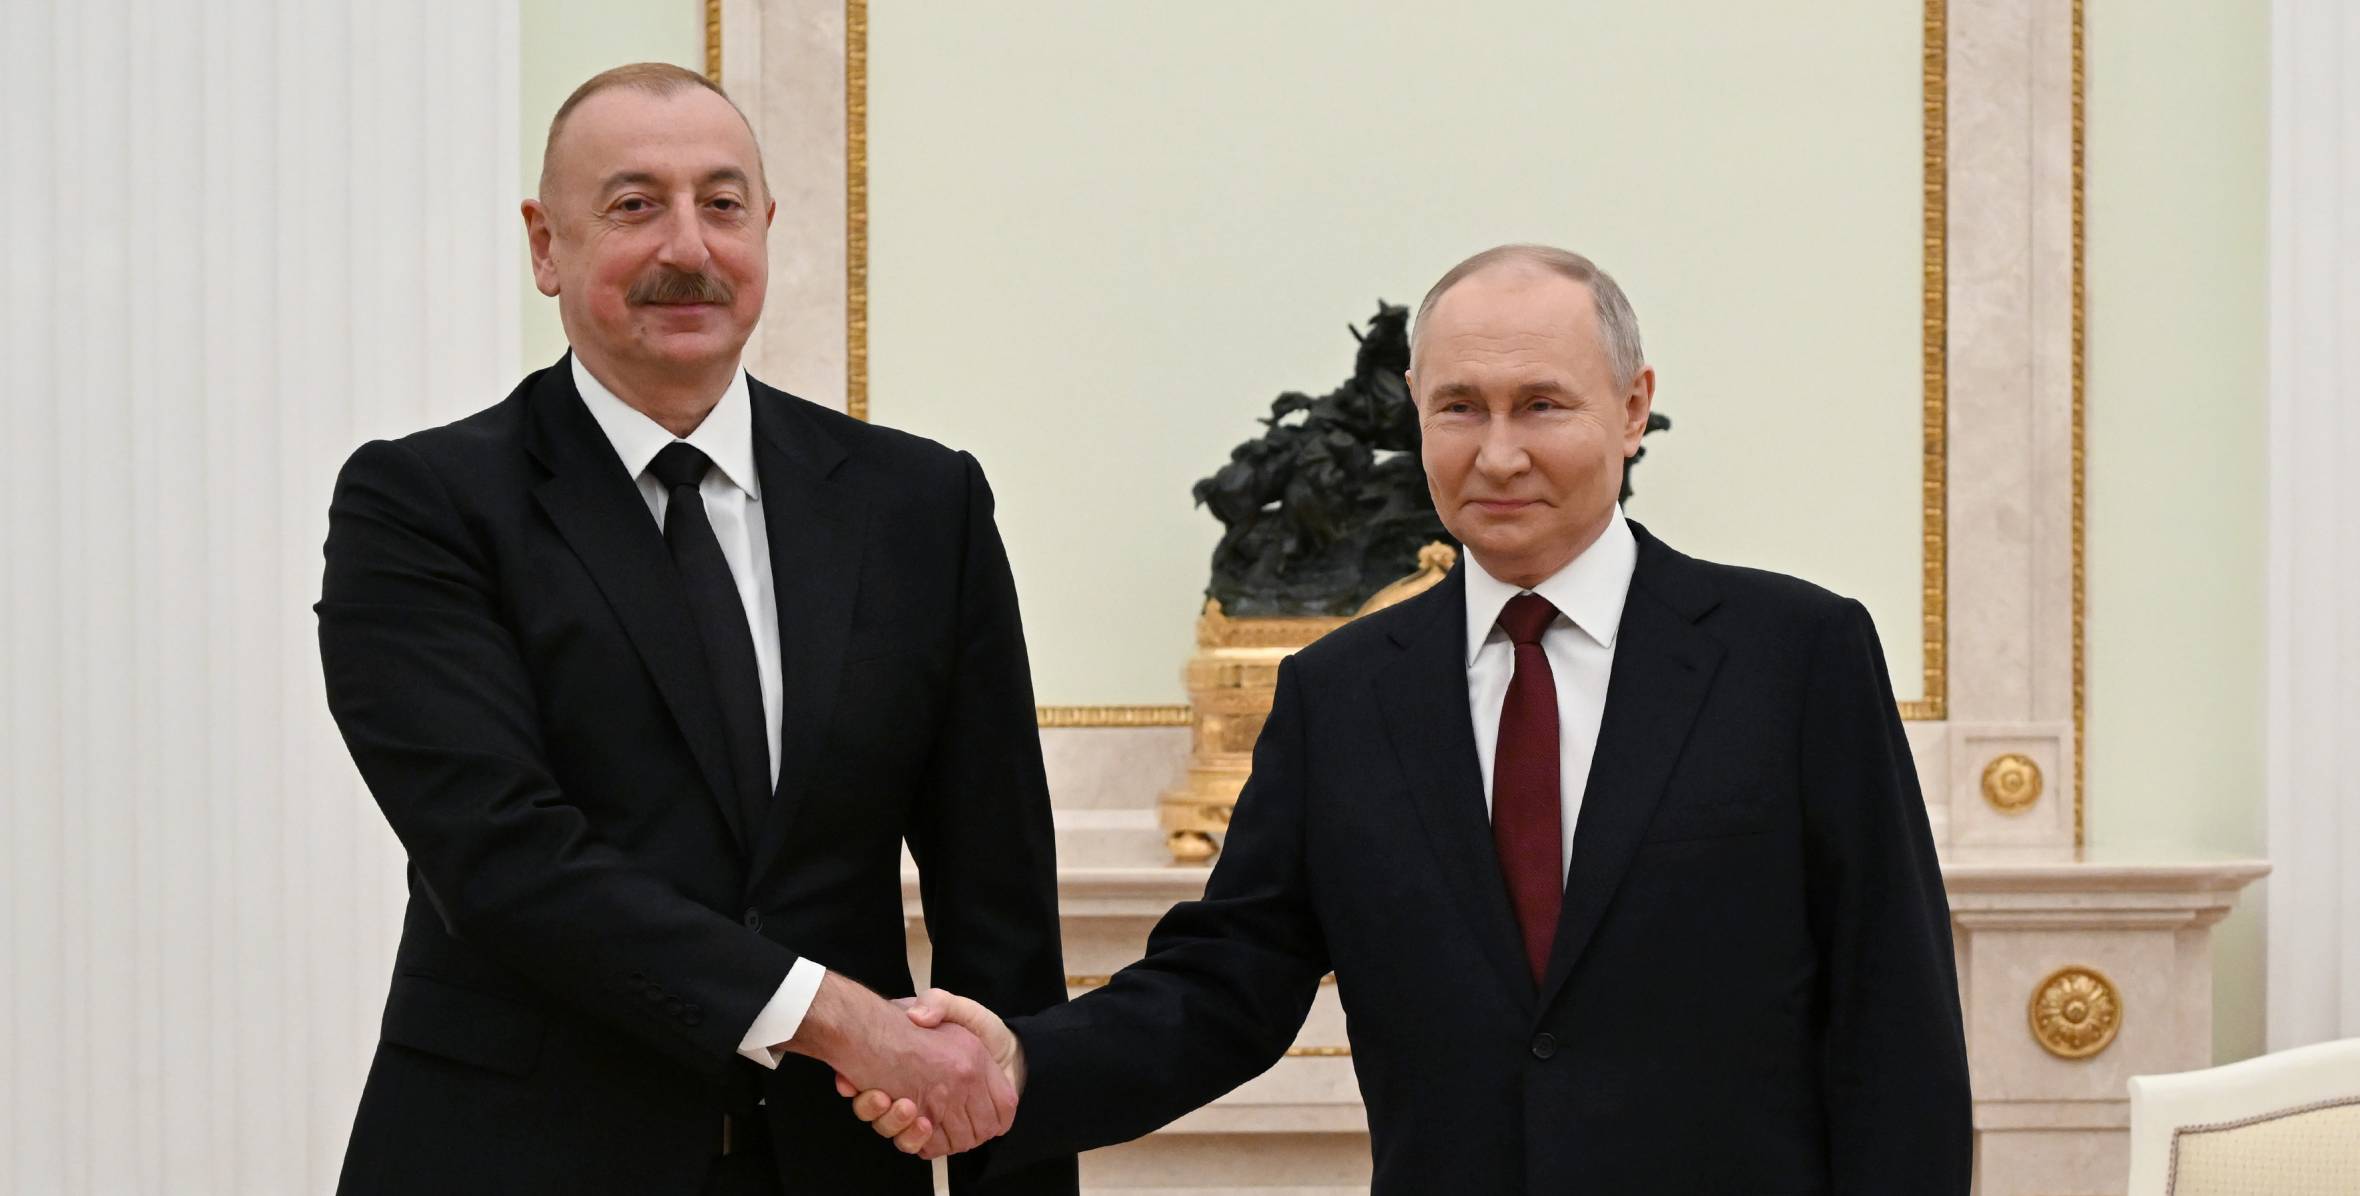 Состоялась встреча Президента Ильхама Алиева и Президента Владимира Путина один на один